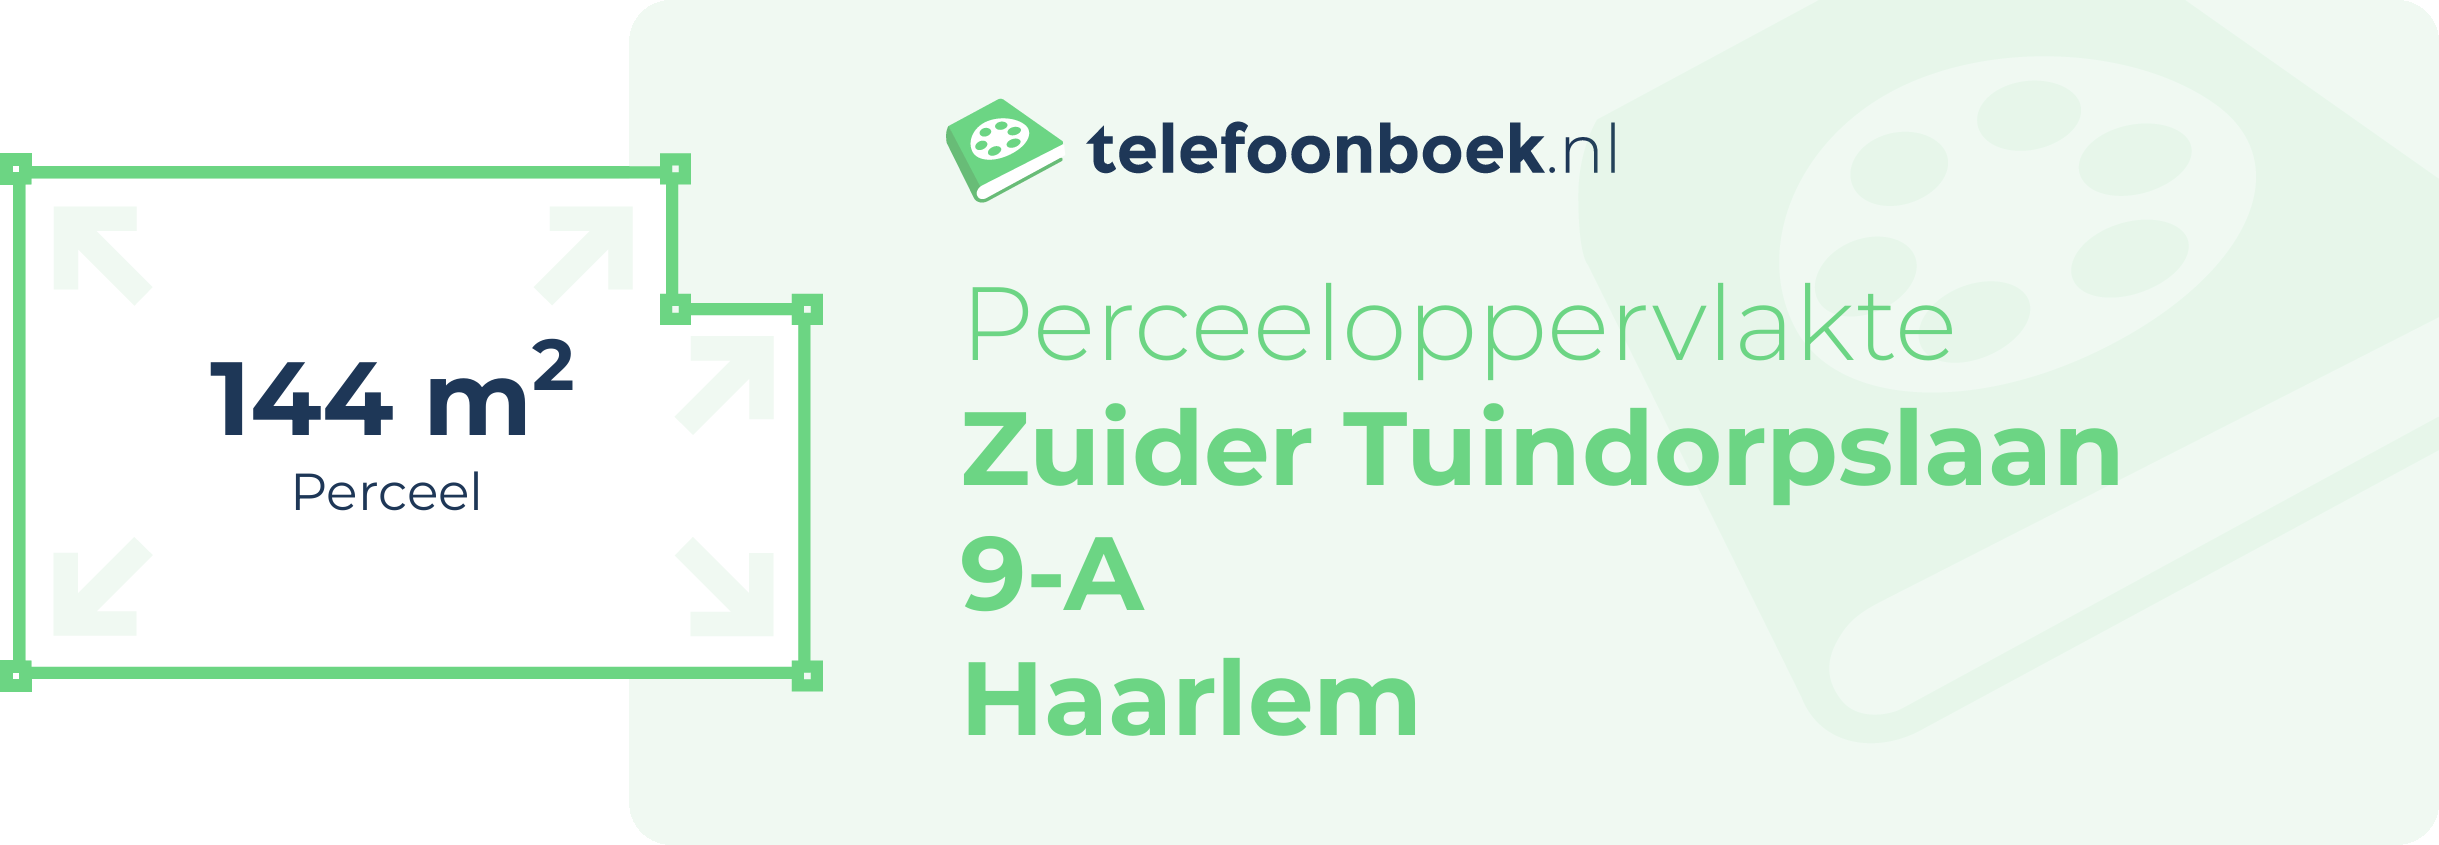 Perceeloppervlakte Zuider Tuindorpslaan 9-A Haarlem